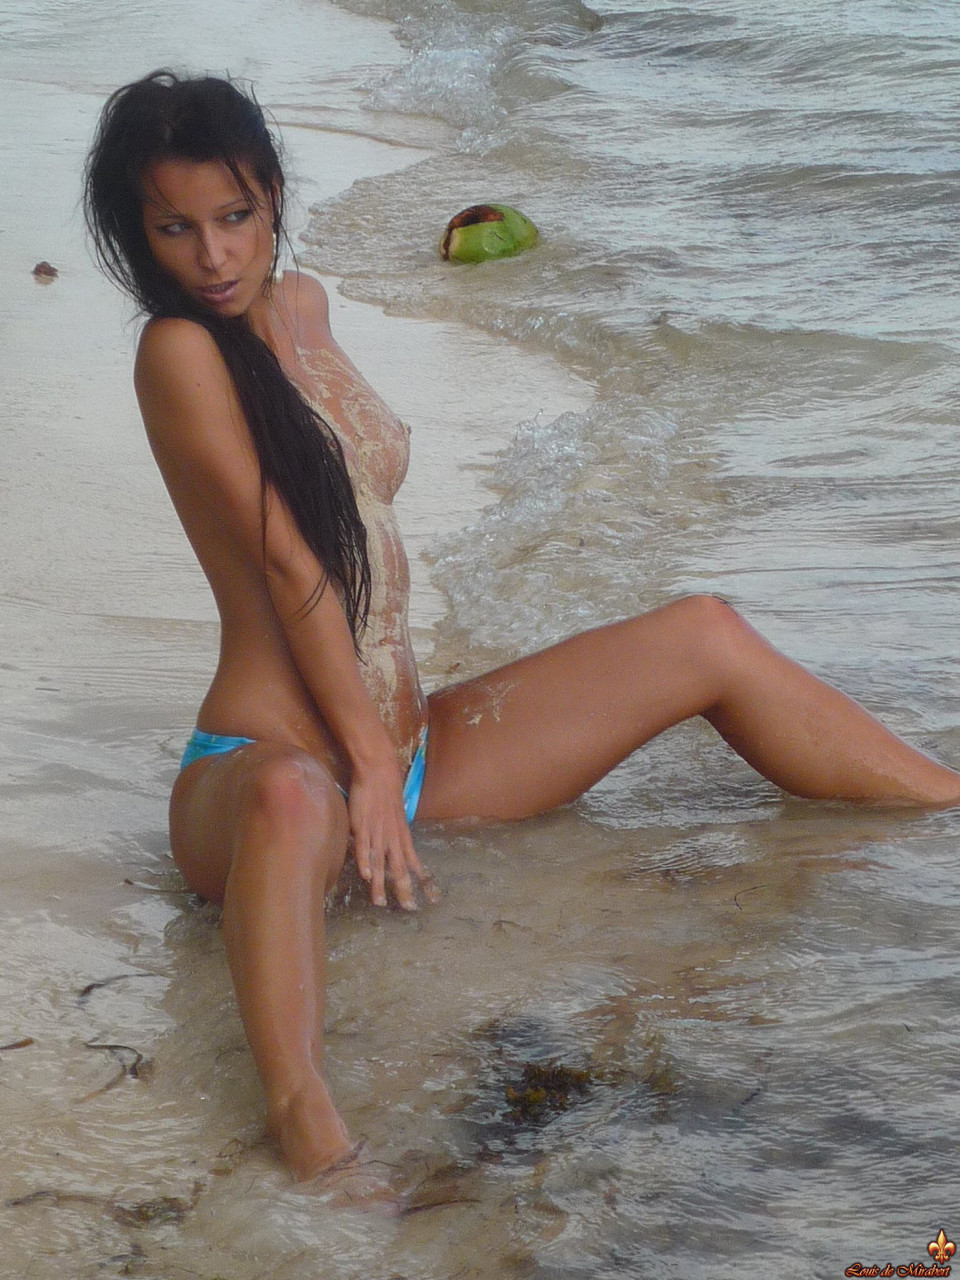 Beautiful girls work free of their swimwear while modeling on a tropical beach photo porno #424108096